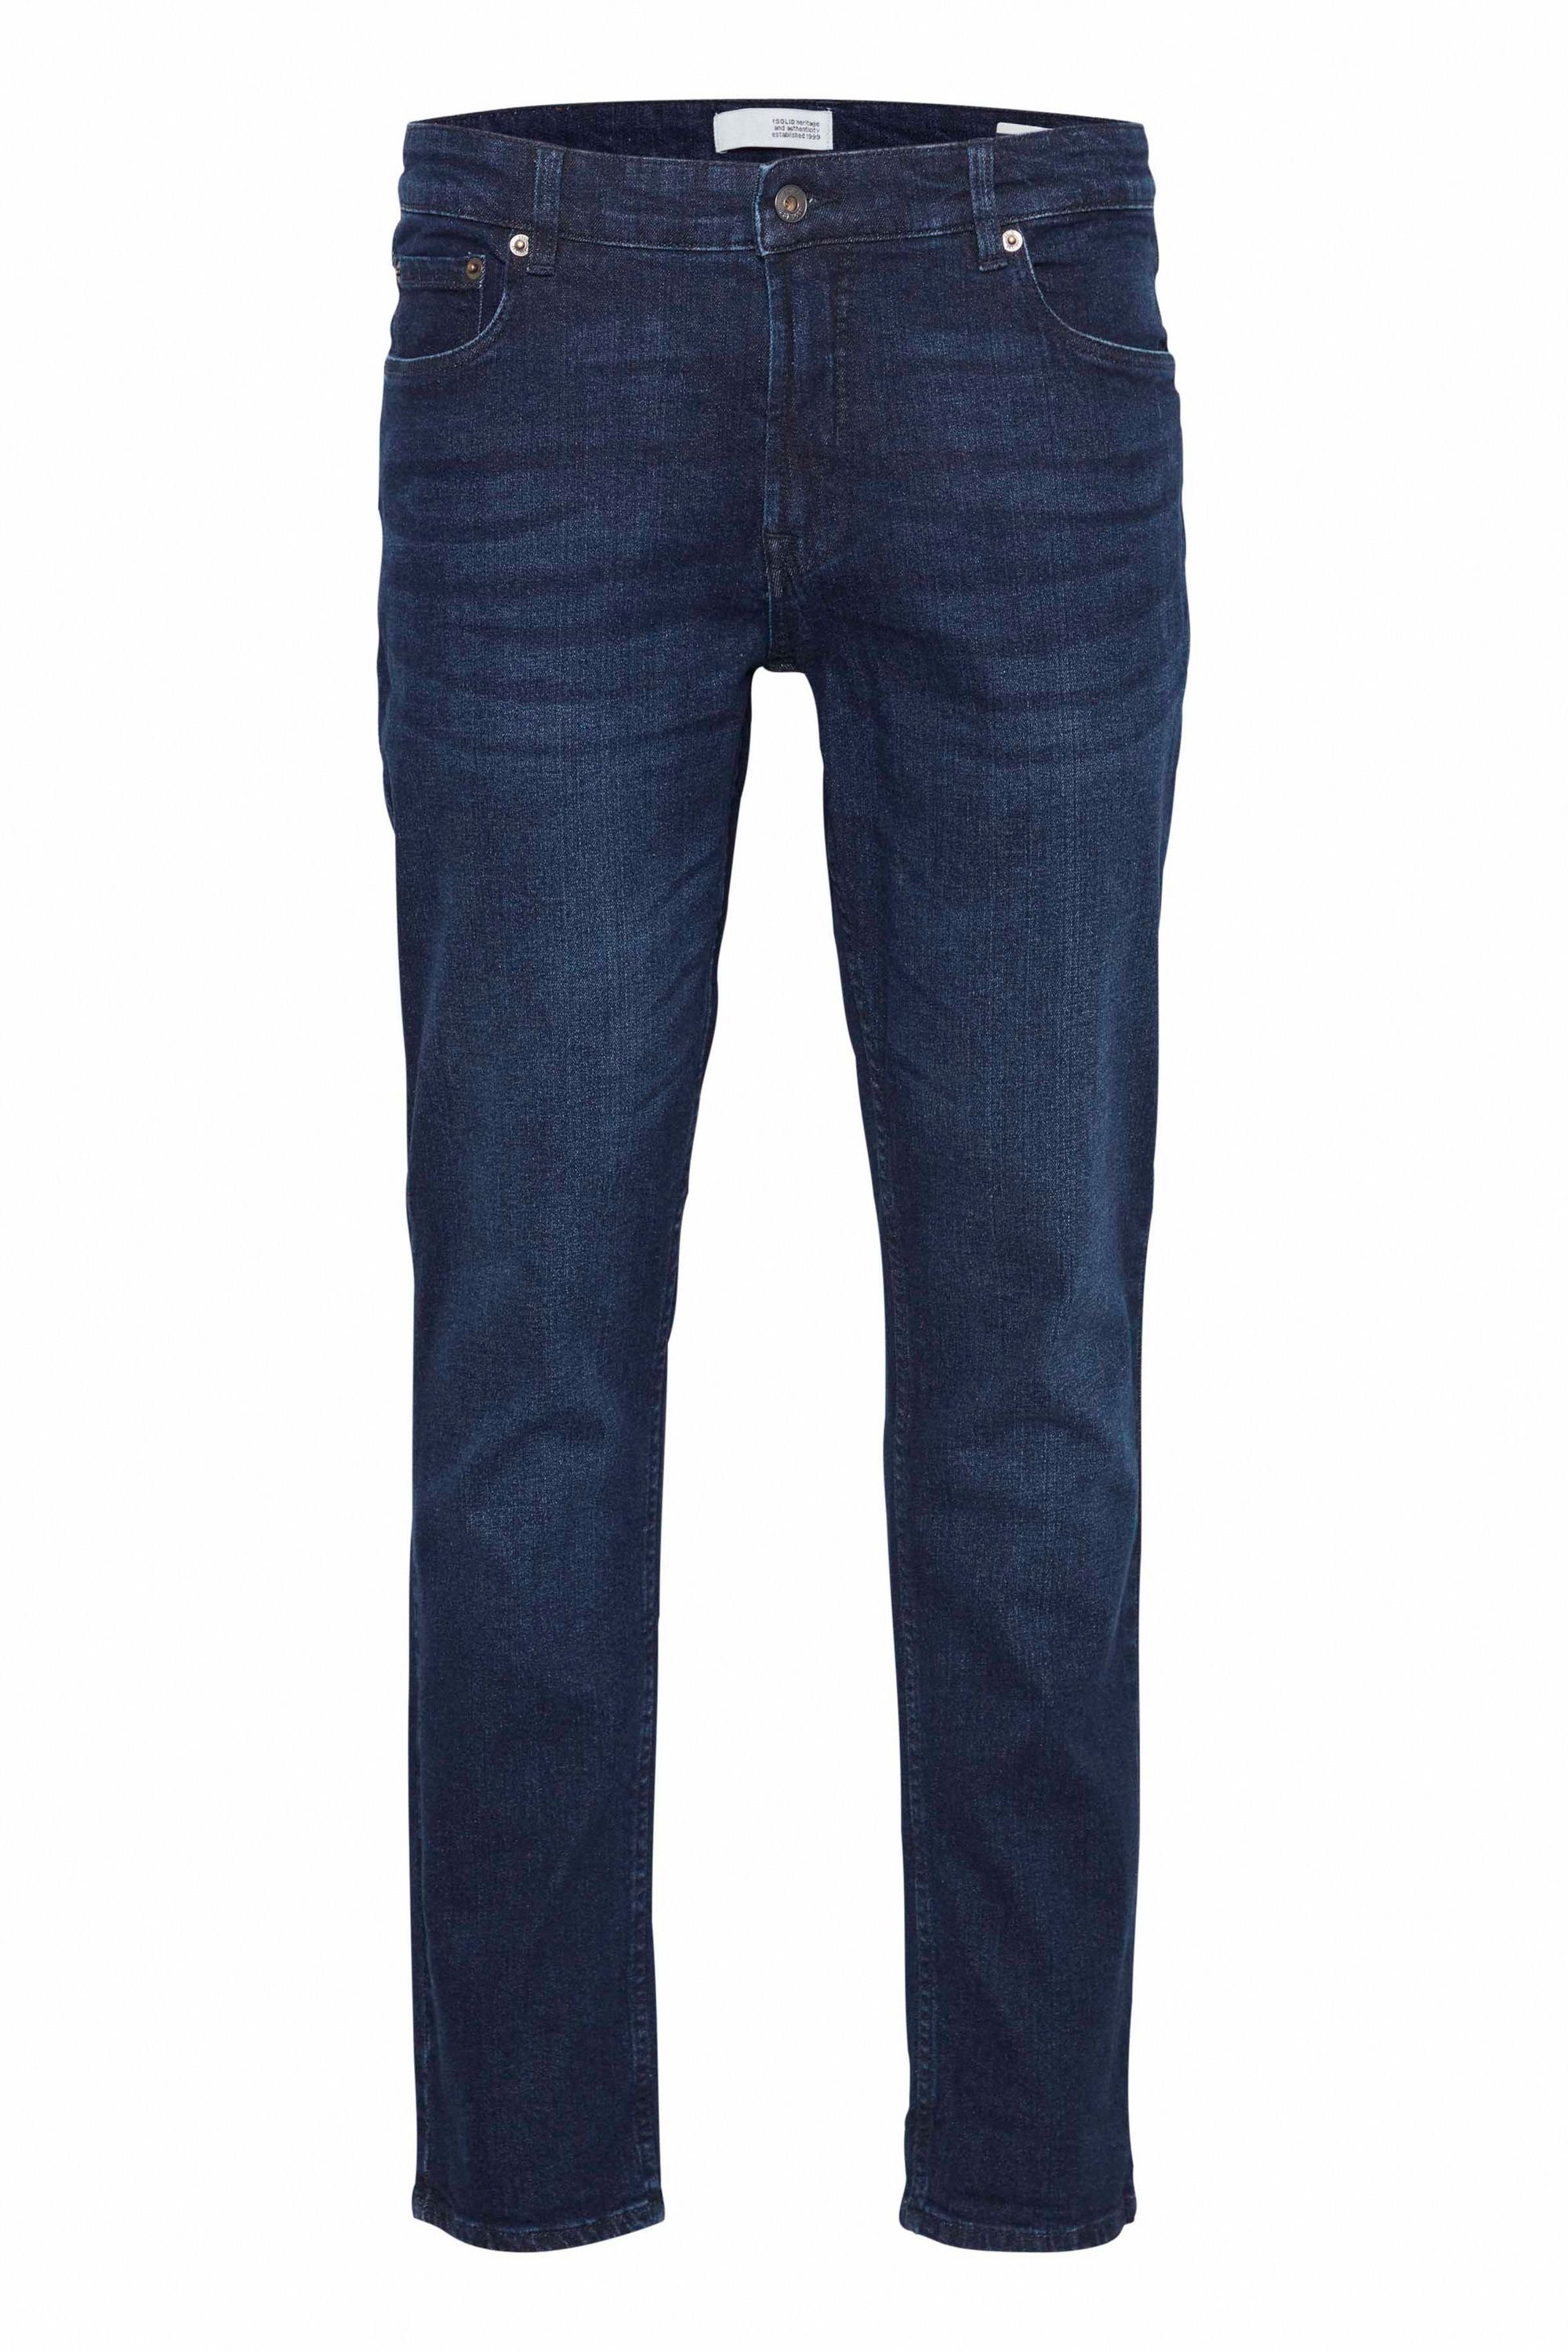 Solid 5-Pocket-Jeans SDJoy Blue blue 21104848 - Dark 202 denim (700031)